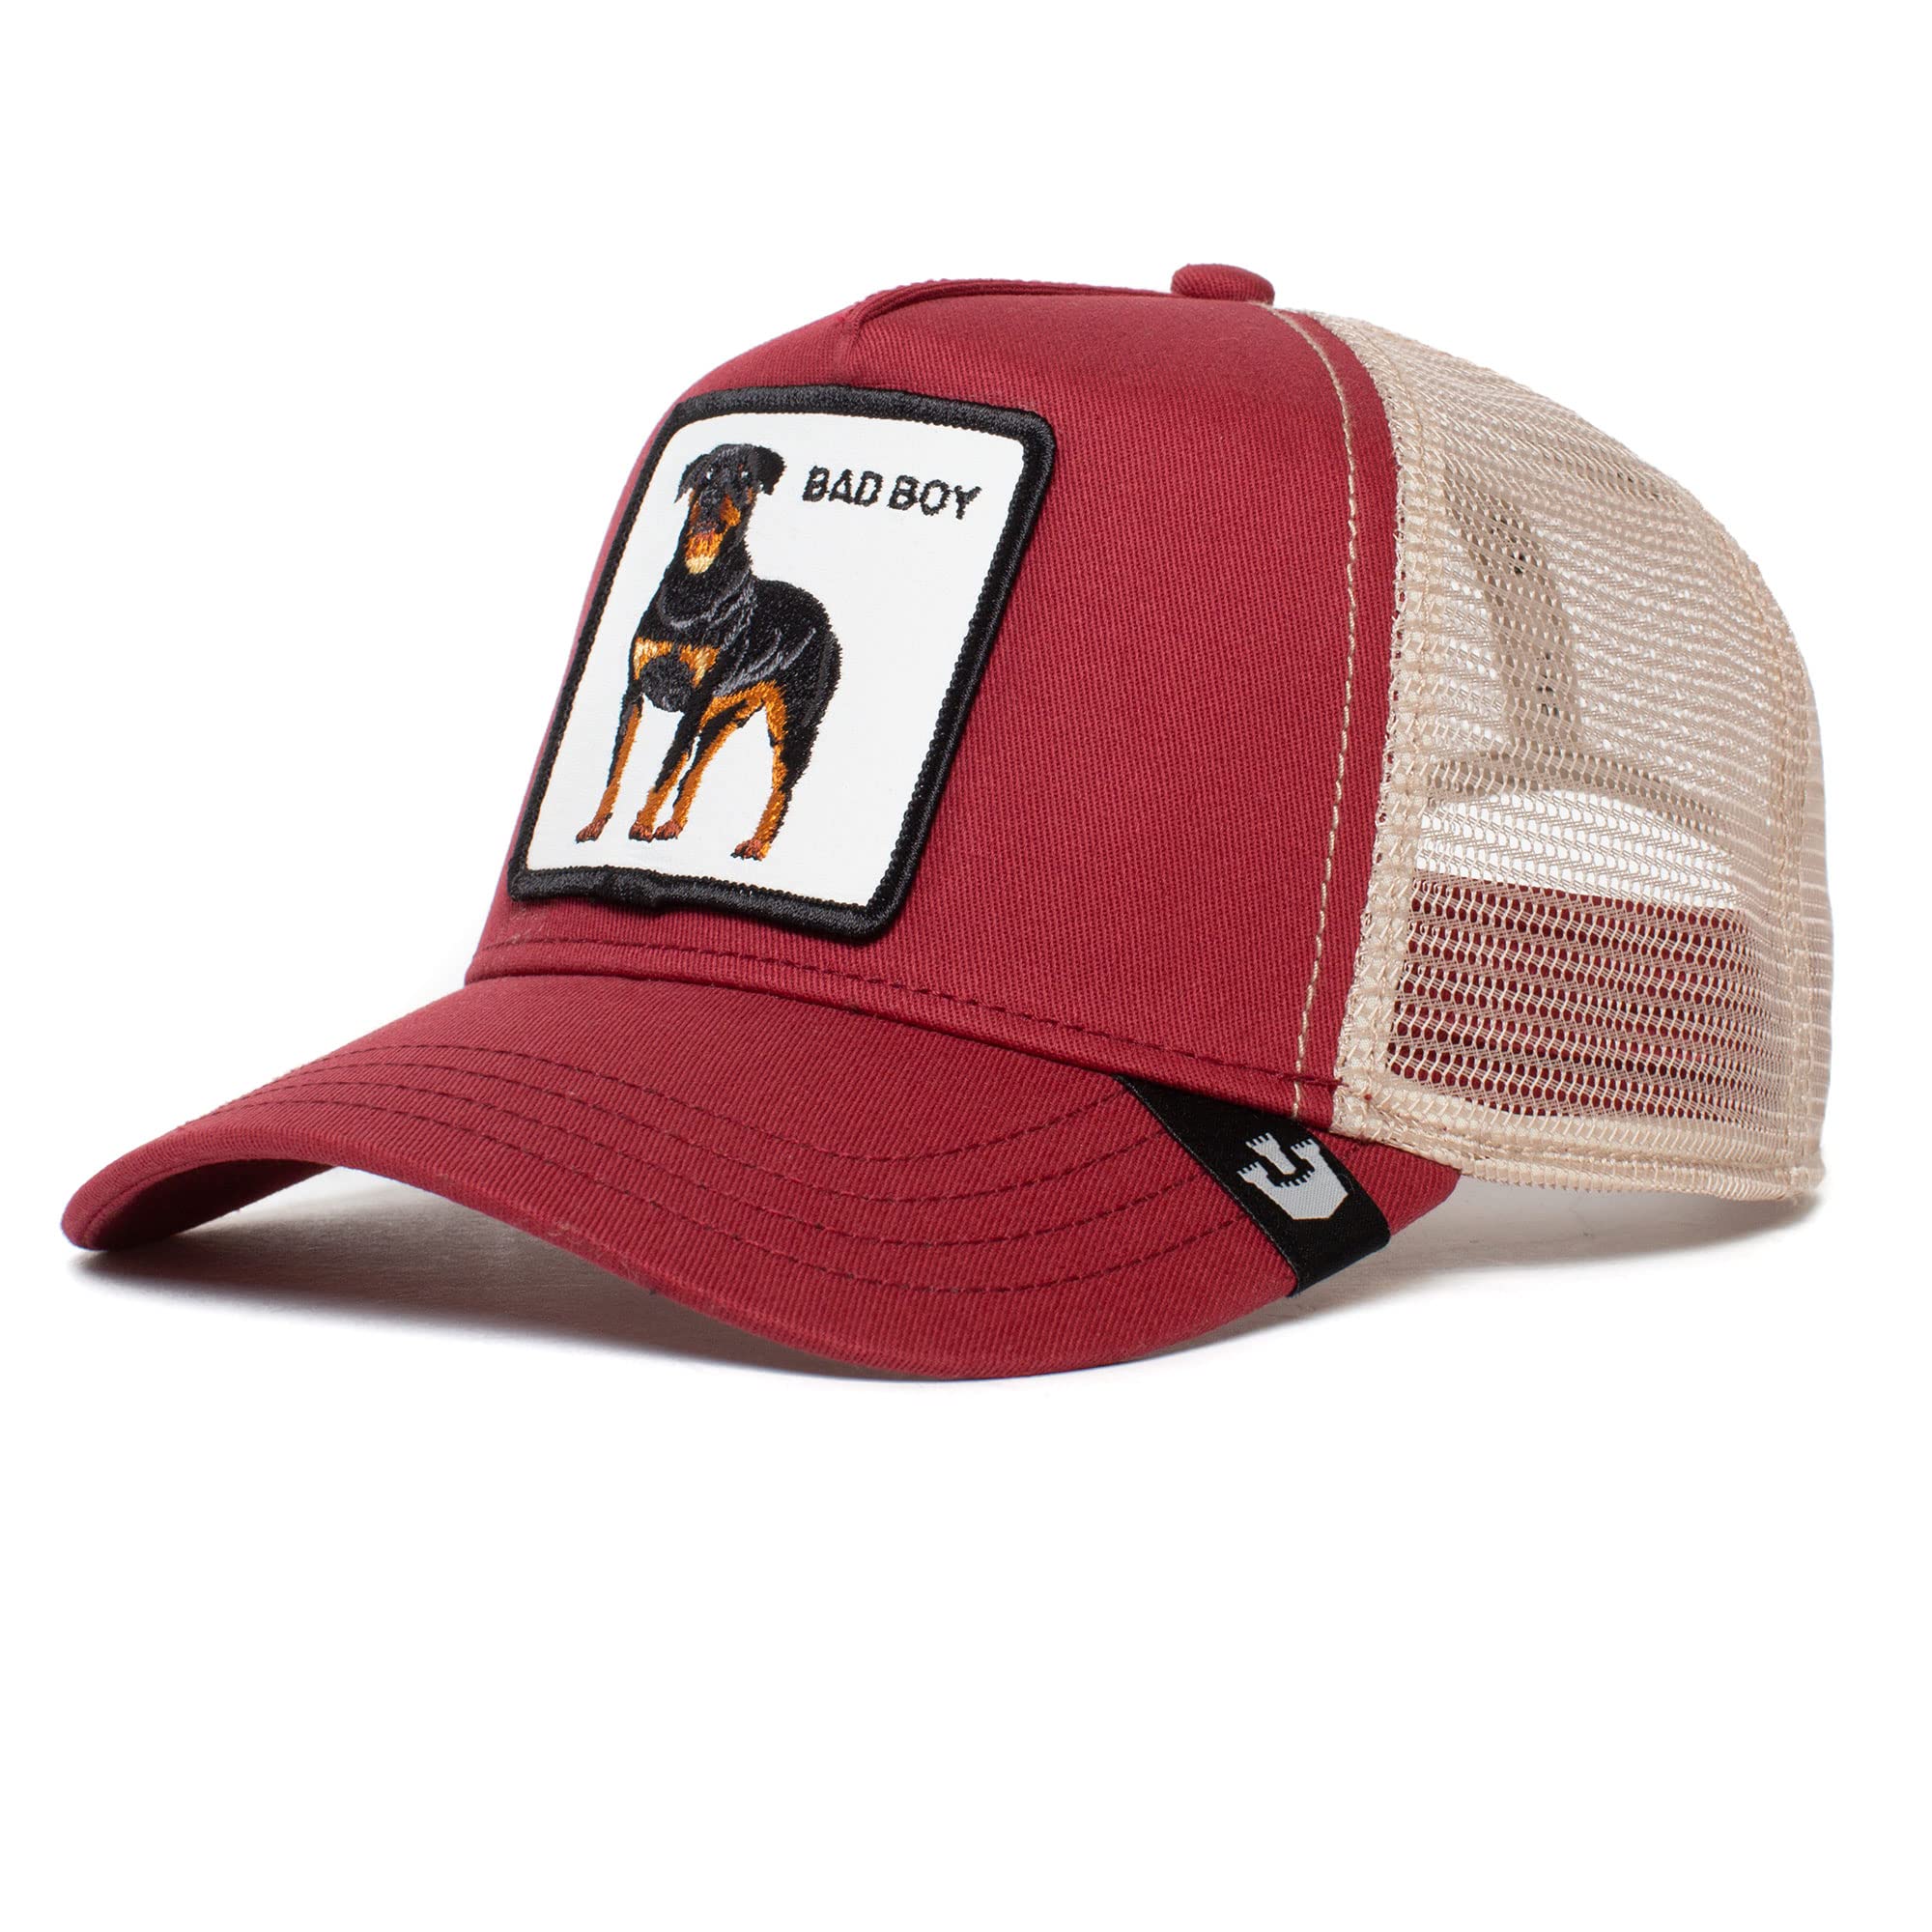 Goorin Bros. The Baddest Boy Trucker Hat Review – American Hat Makers